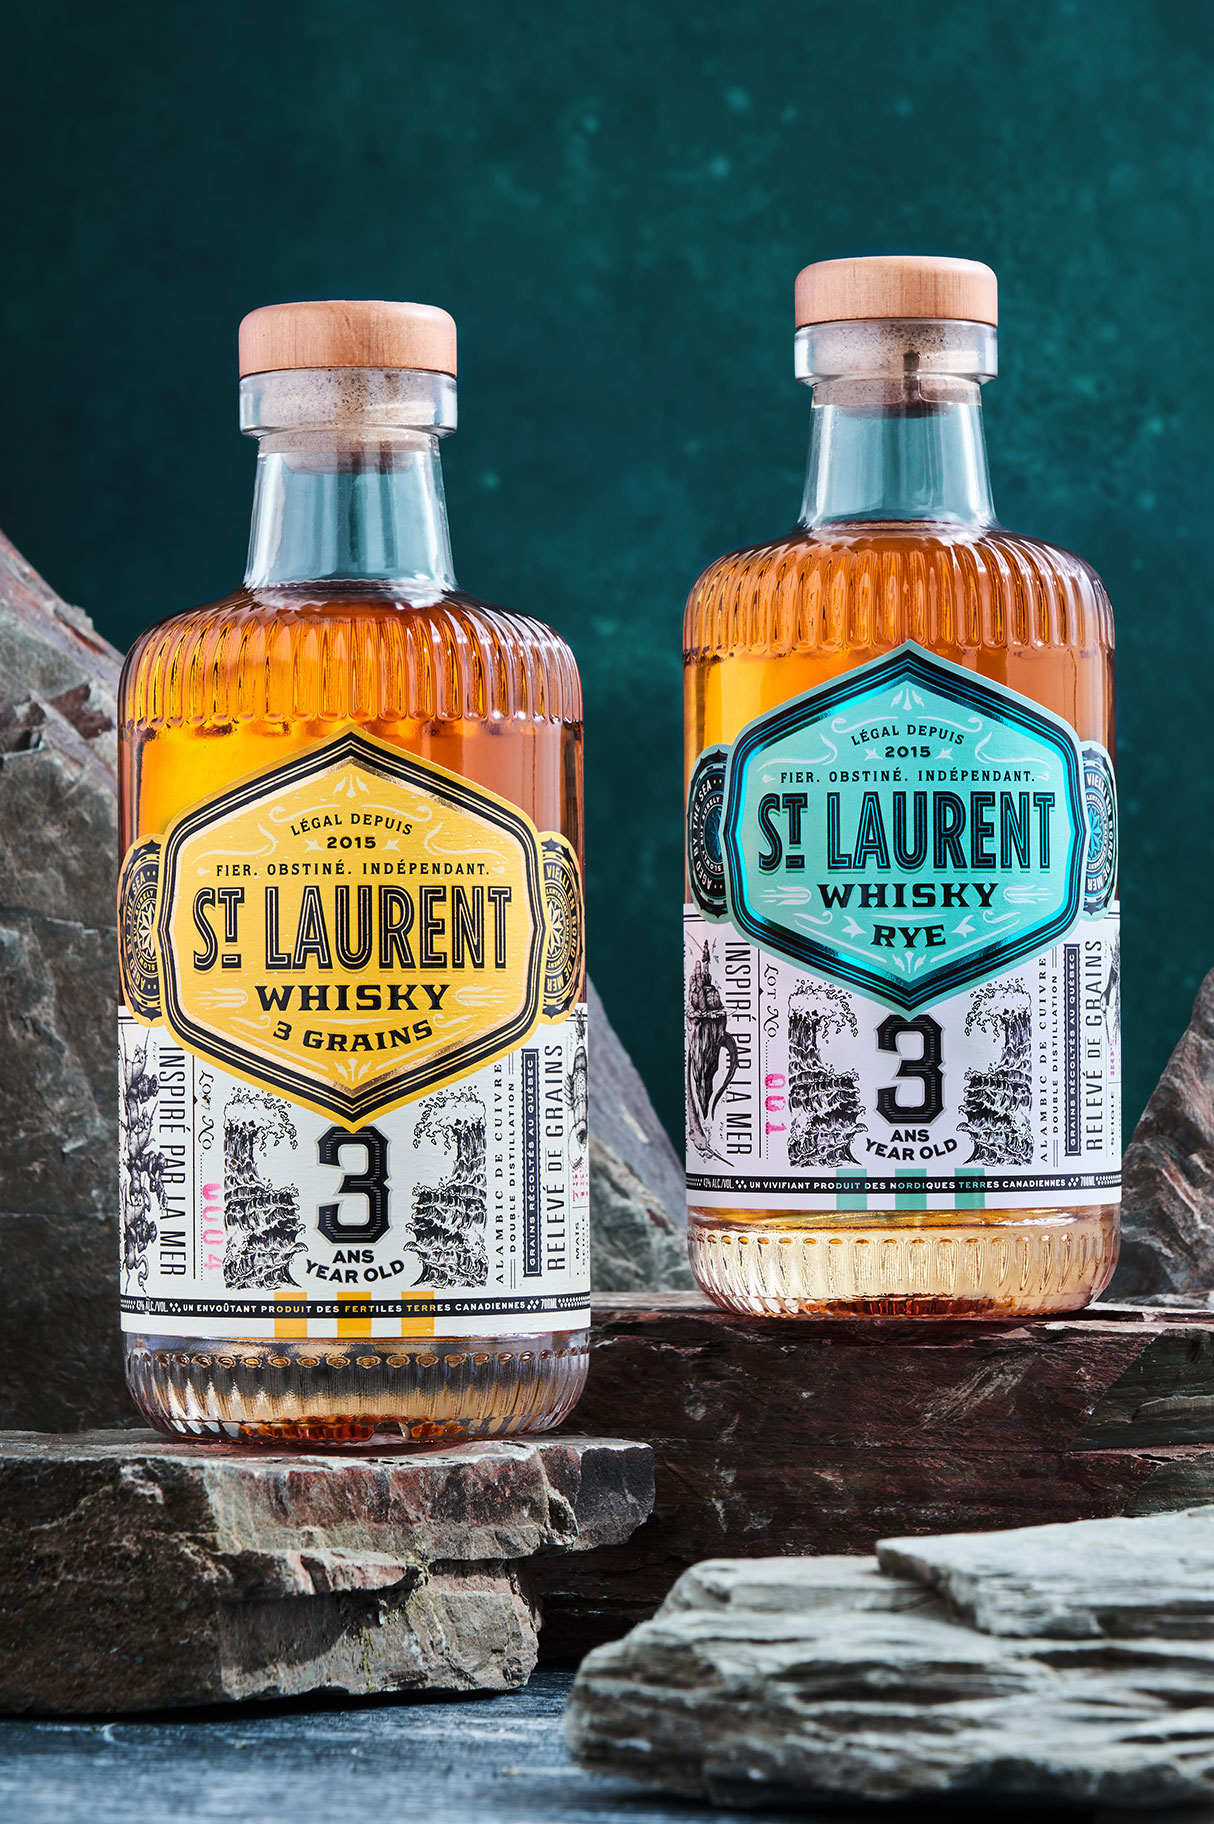 Chad Michael Studio Creates Packaging Design for St. Laurent Whiskies